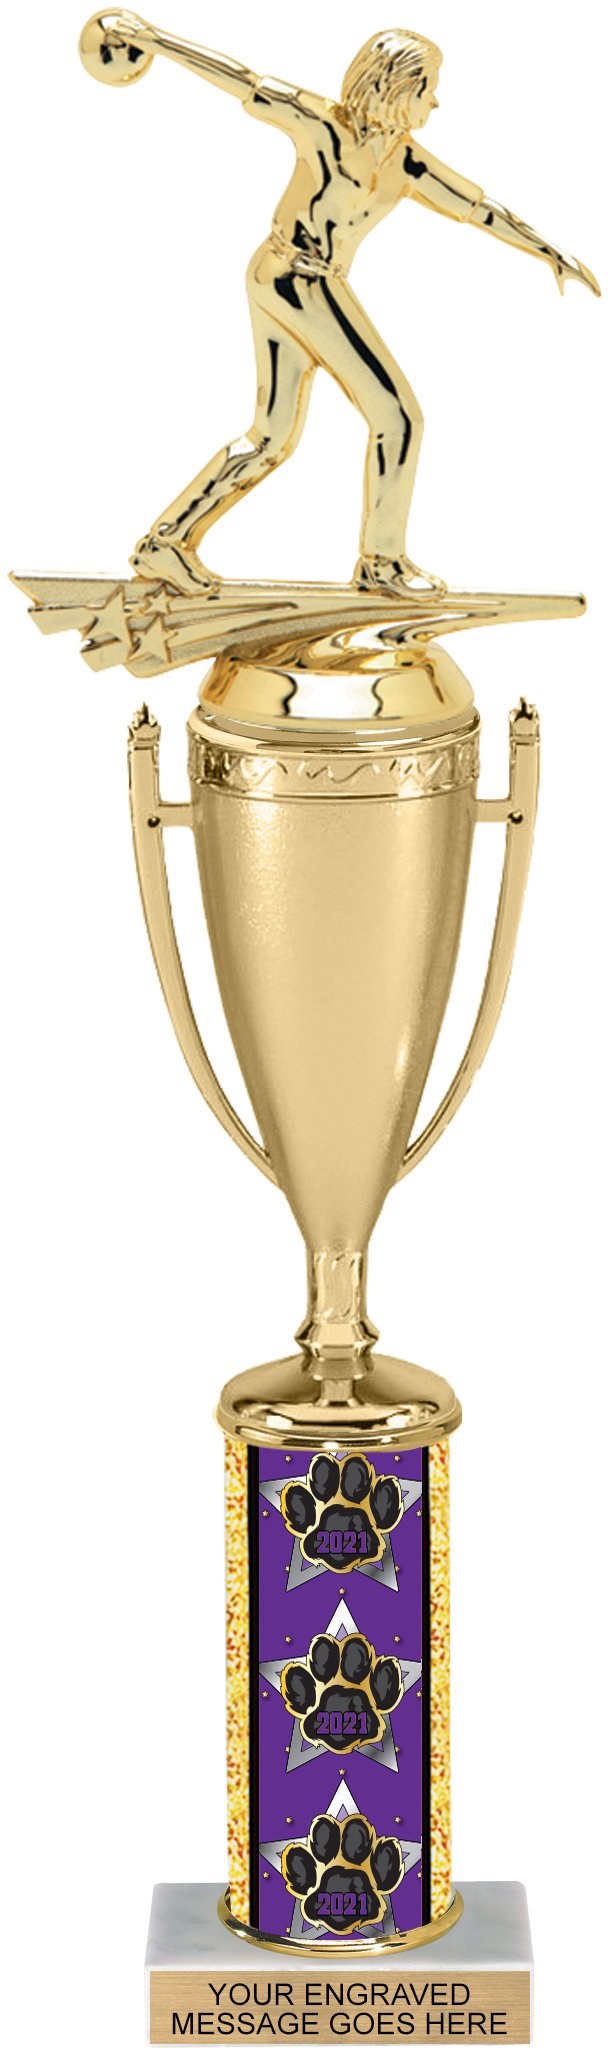 Year 15 inch Paw Column Cup Trophy